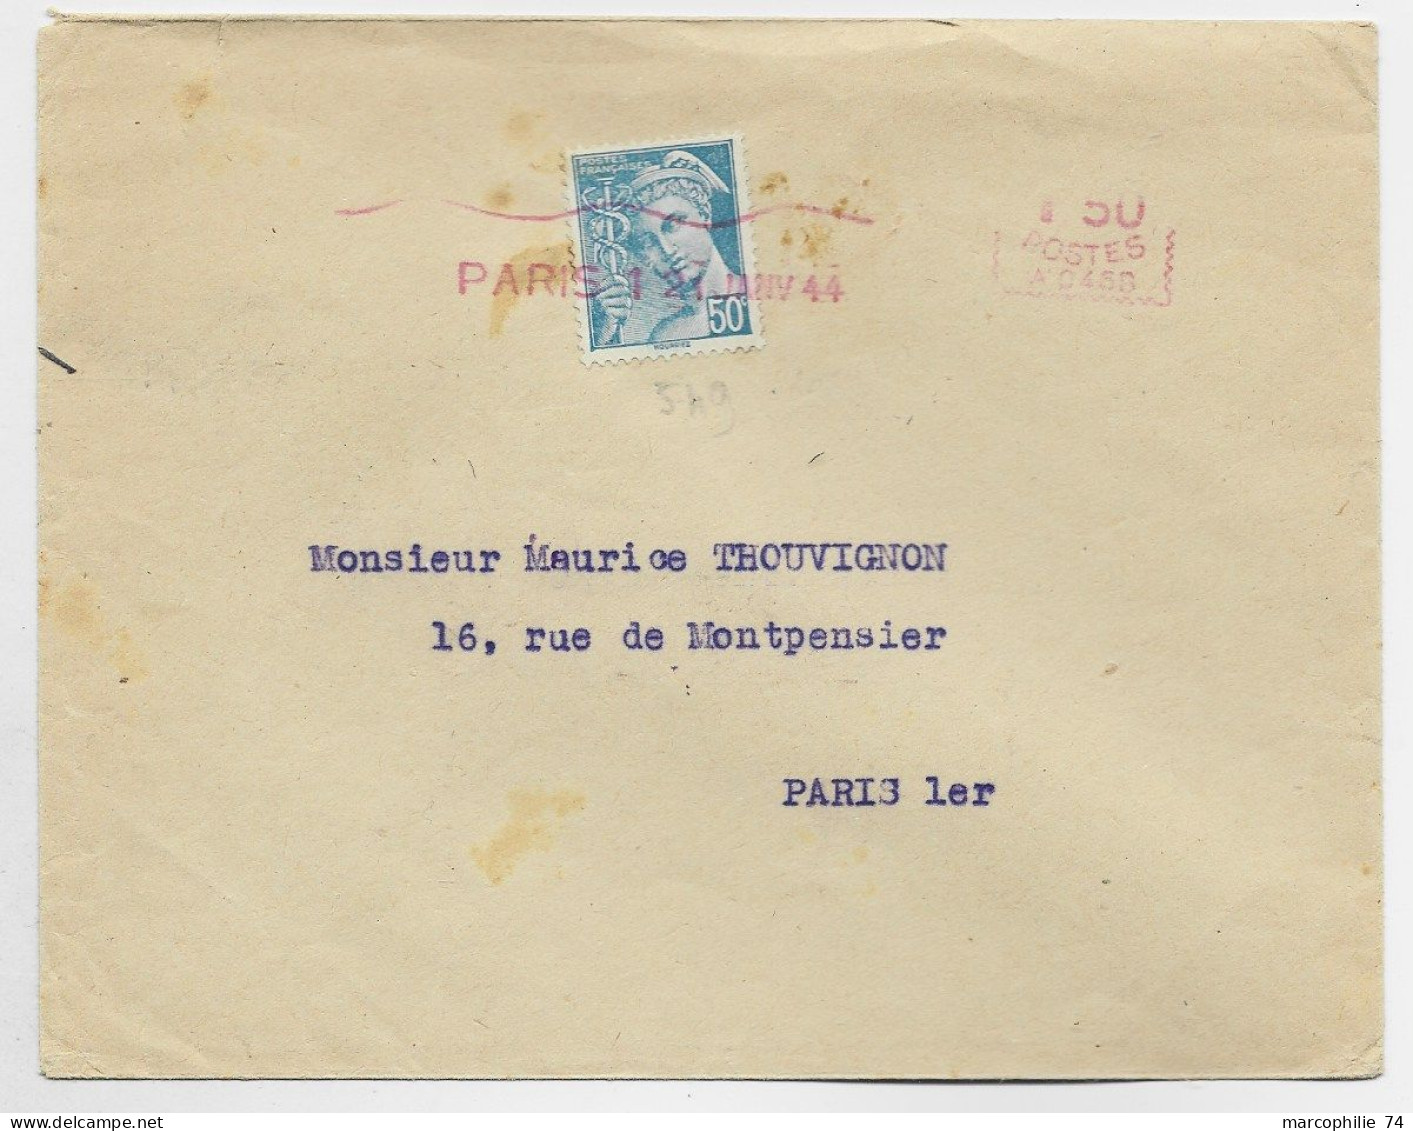 FRANCE MERCURE 50C N°549 OBL EMA 1FR50 A 456 PARIS 1 21 JANV 1944 AU TARIF - 1938-42 Mercure